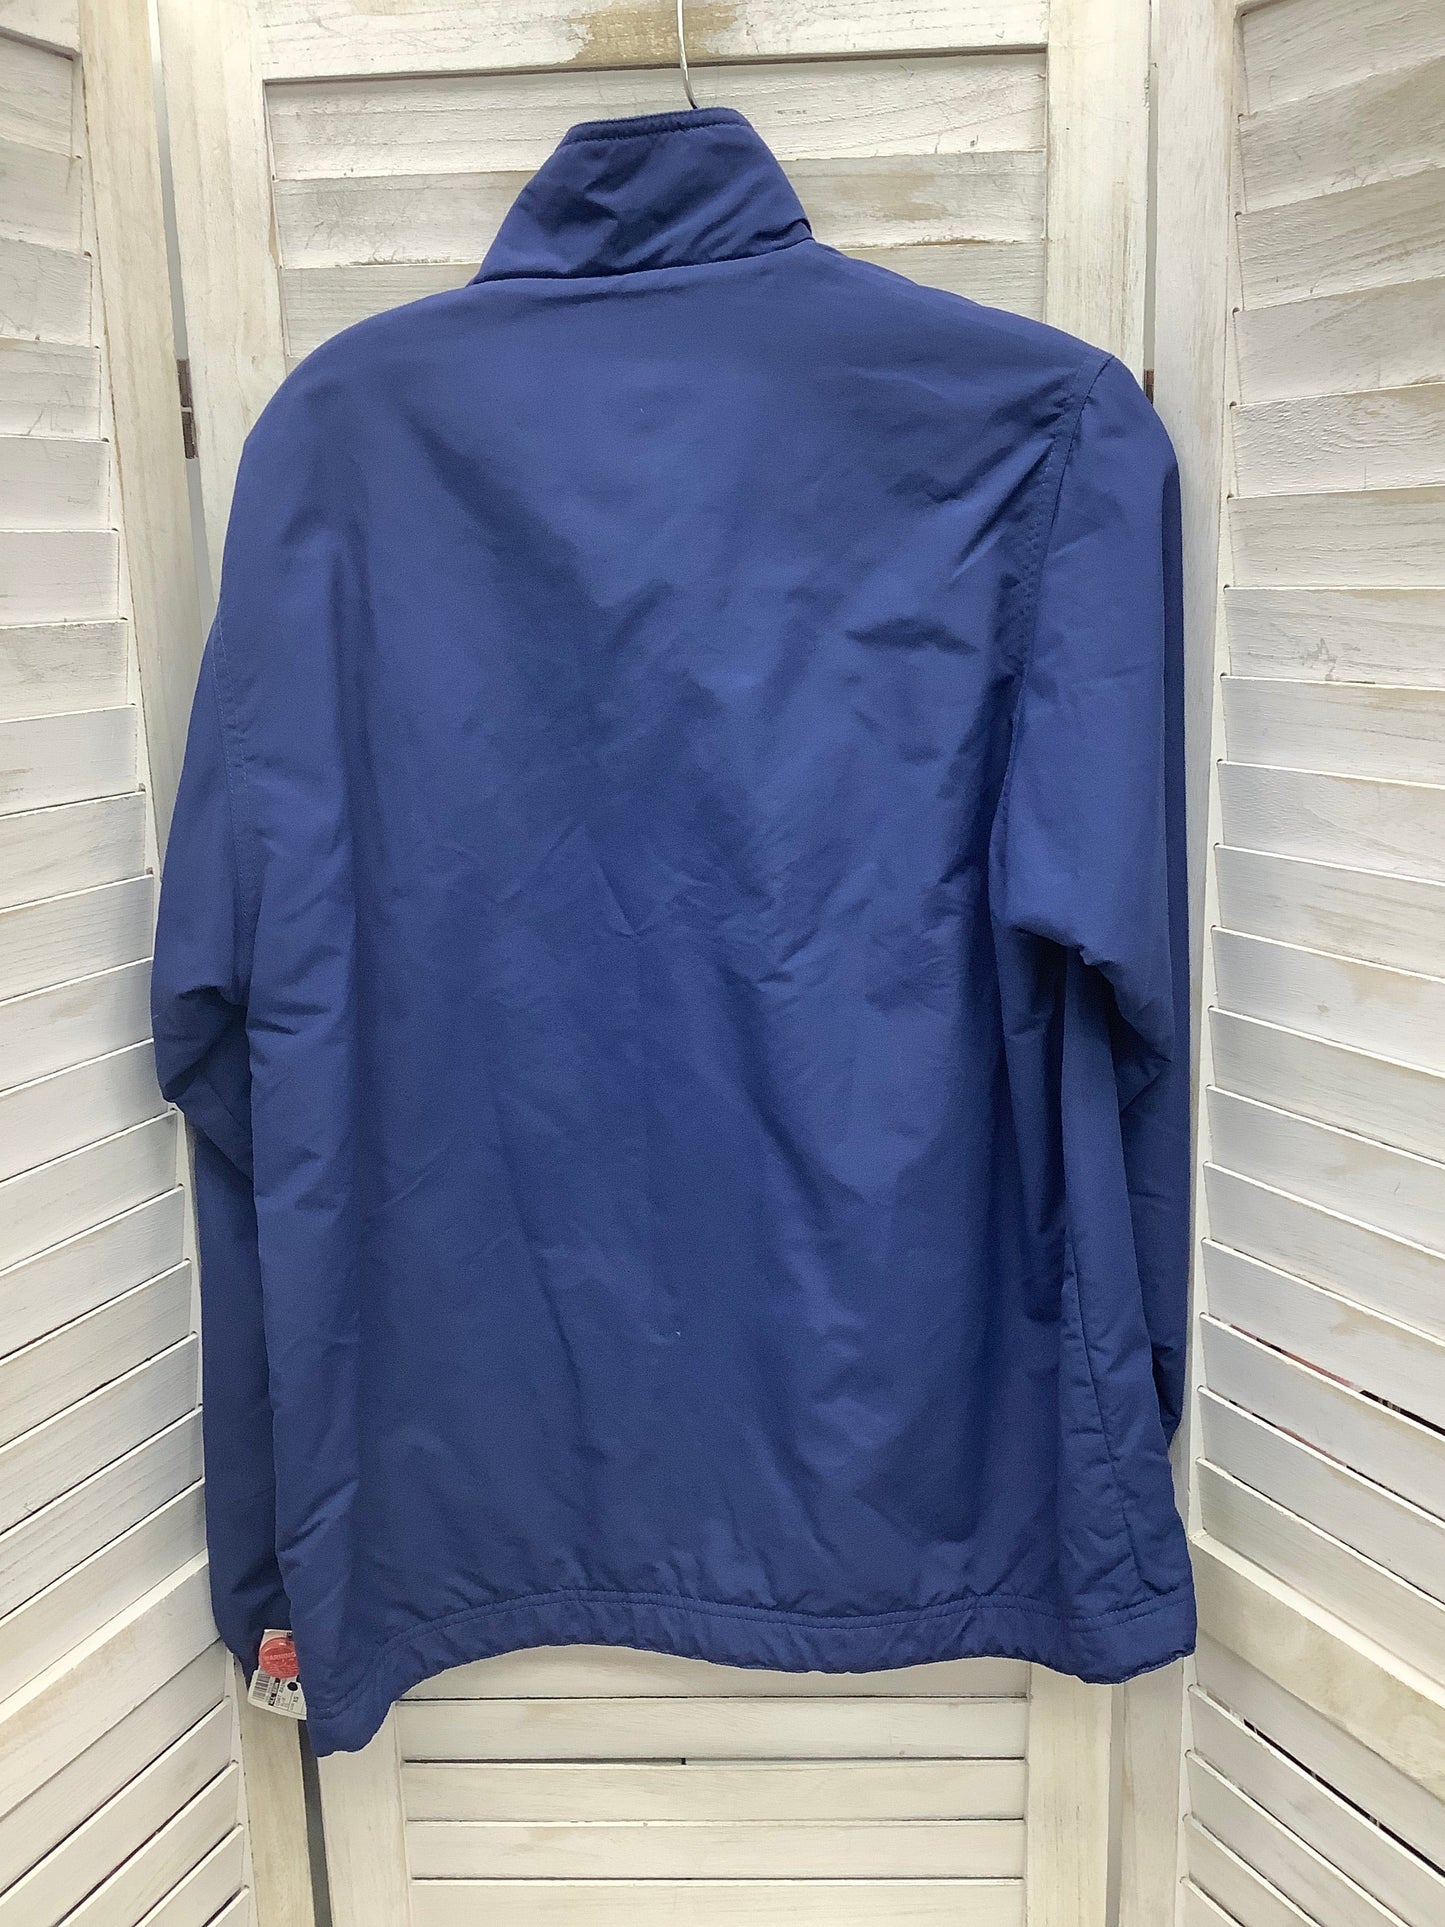 Blue Coat Raincoat Ll Bean, Size Xs